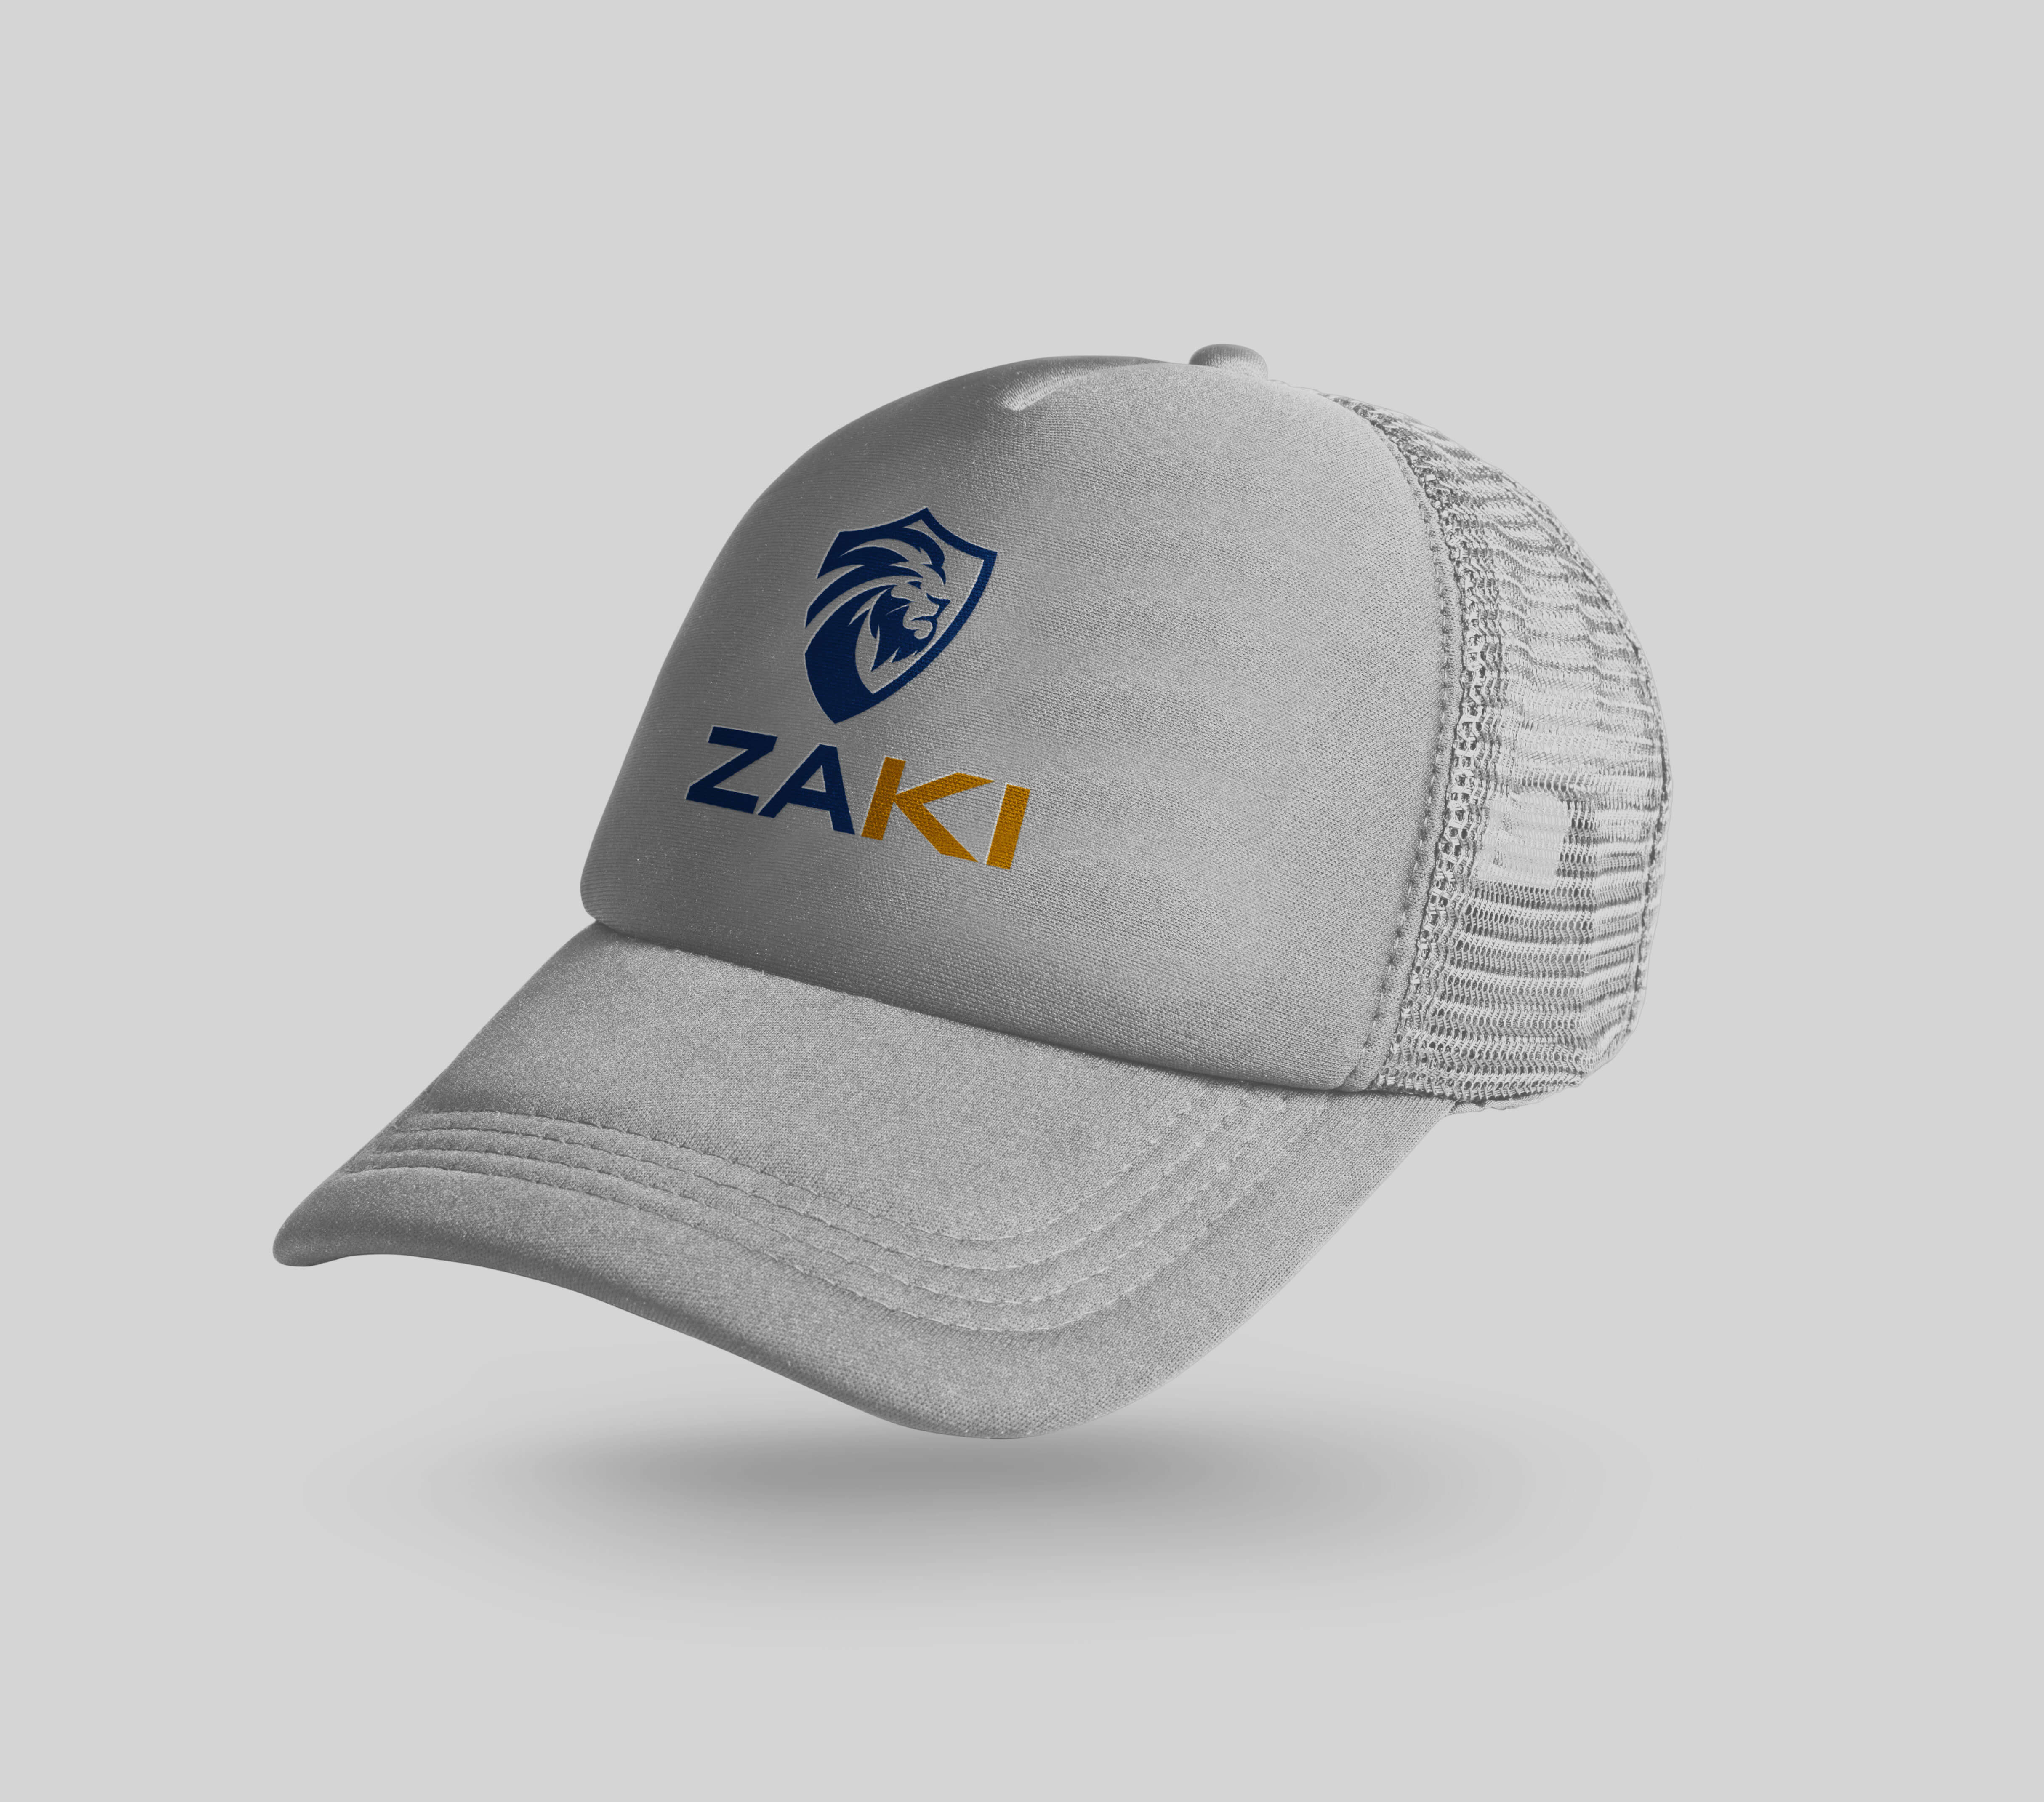 Branding de zaki